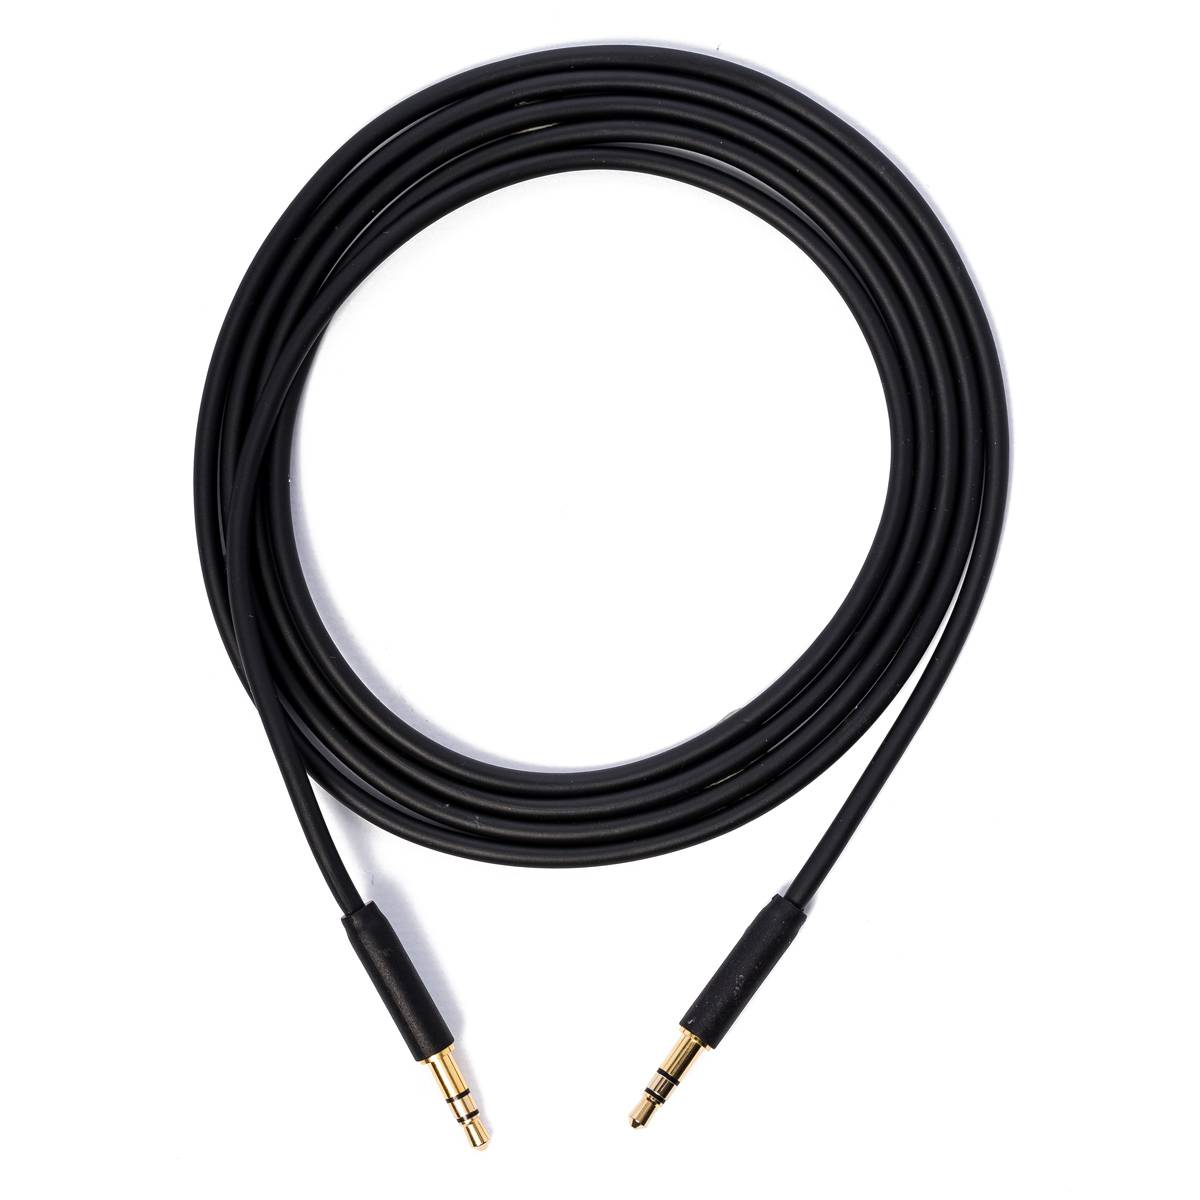 Cable Conexion Jack 3 5mm Malemale 1 5m Black